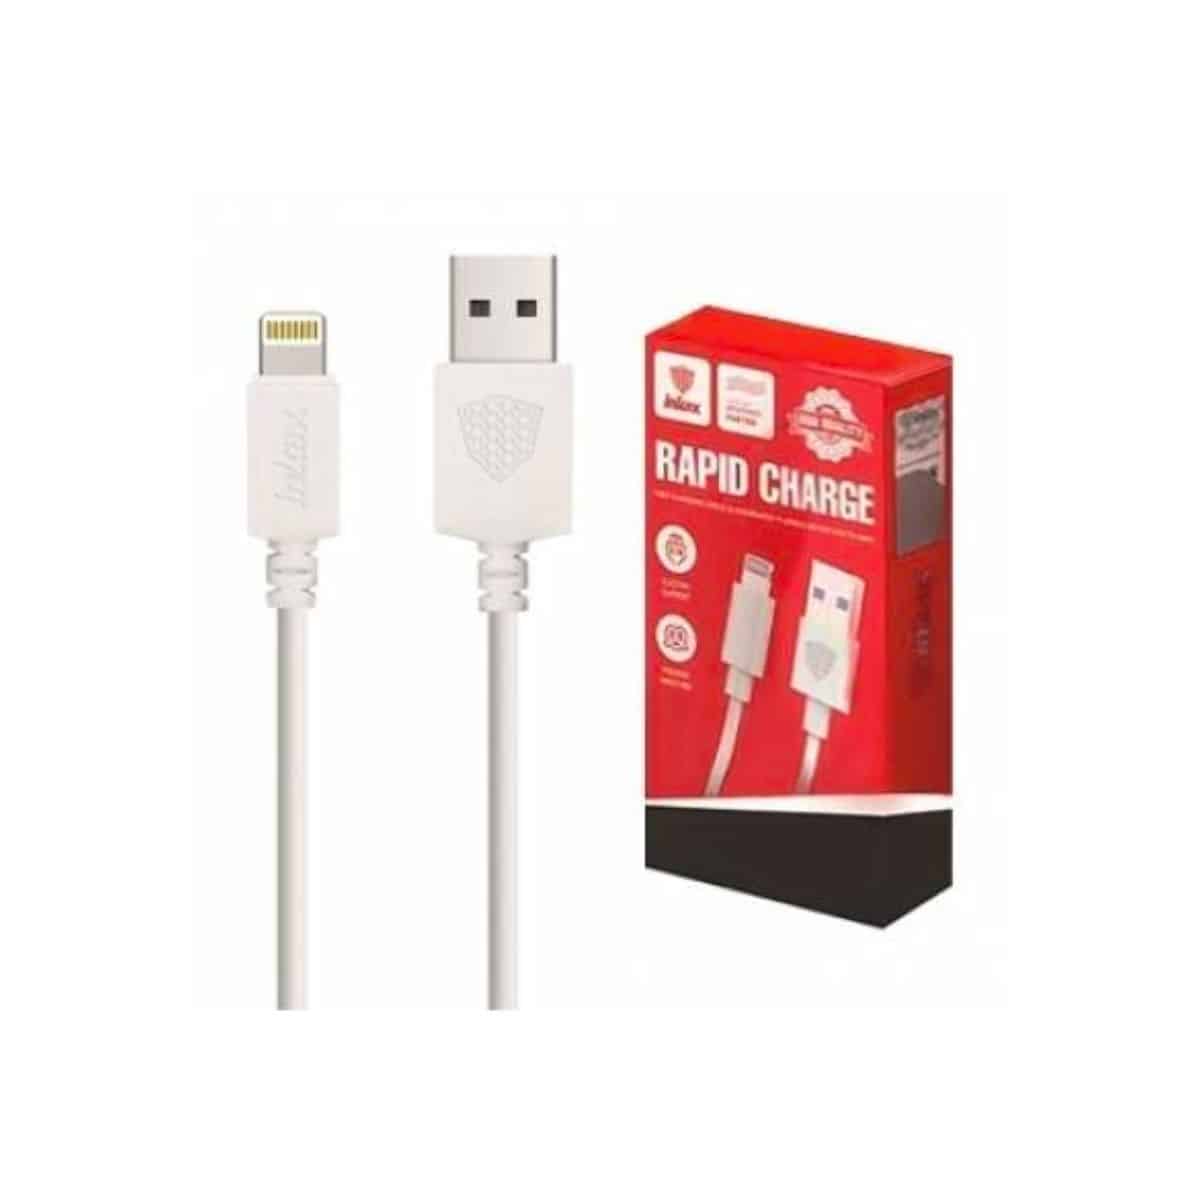 Cable Inkax 1 metro Lightning carga rapida CB-01 iPhone iPad - Tecsys